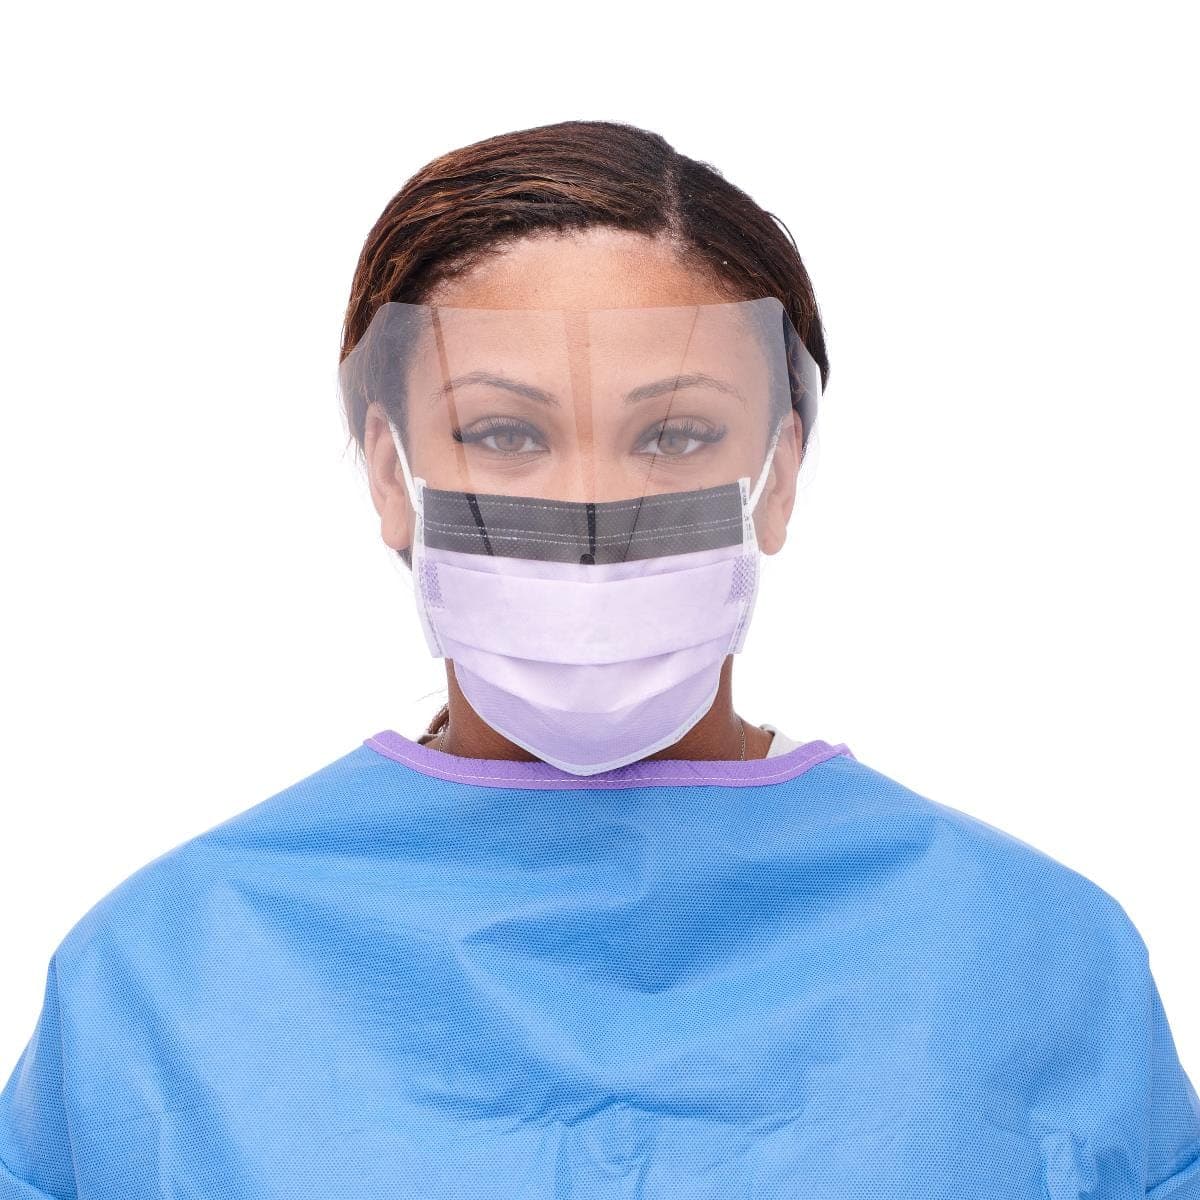 Medline Purple / Case of 100 Medline ASTM Level 3 Procedure Face Masks with Eye Shield and Ear Loops